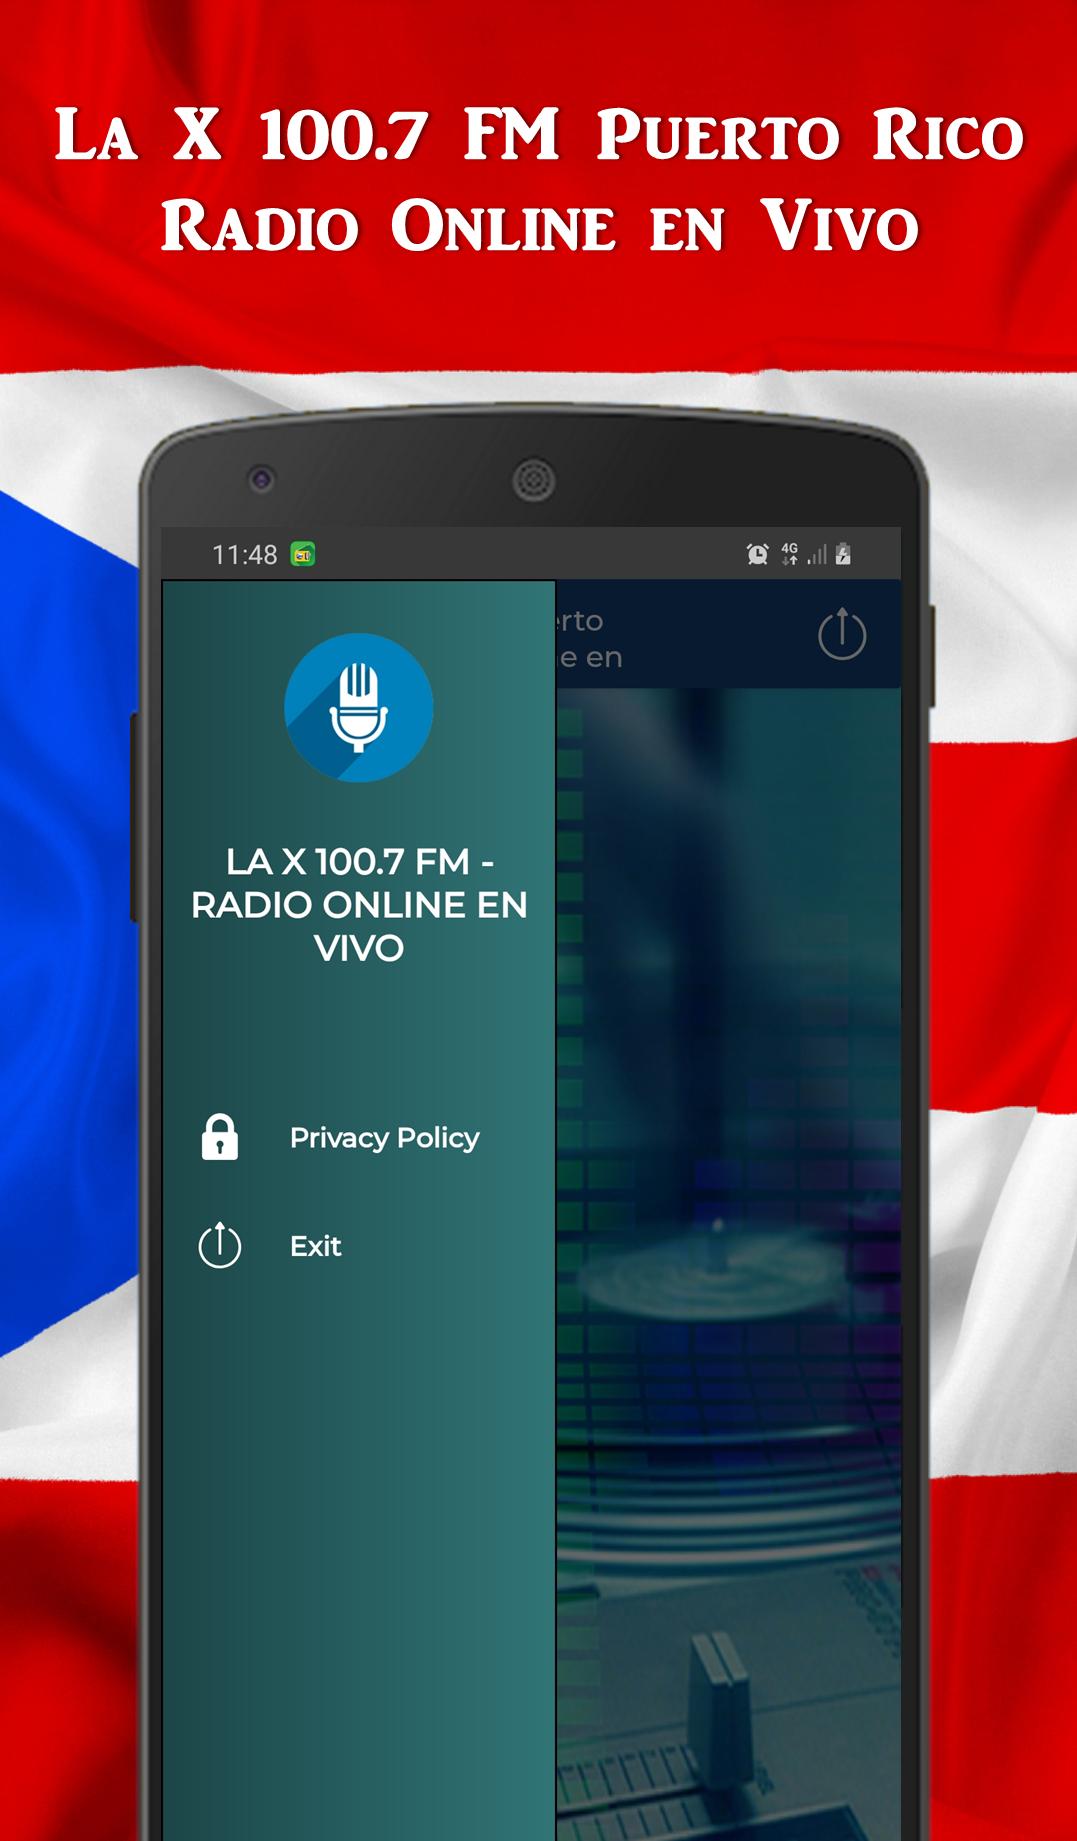 La X 100.7 FM Puerto Rico - Live Online Radio for Android - APK Download